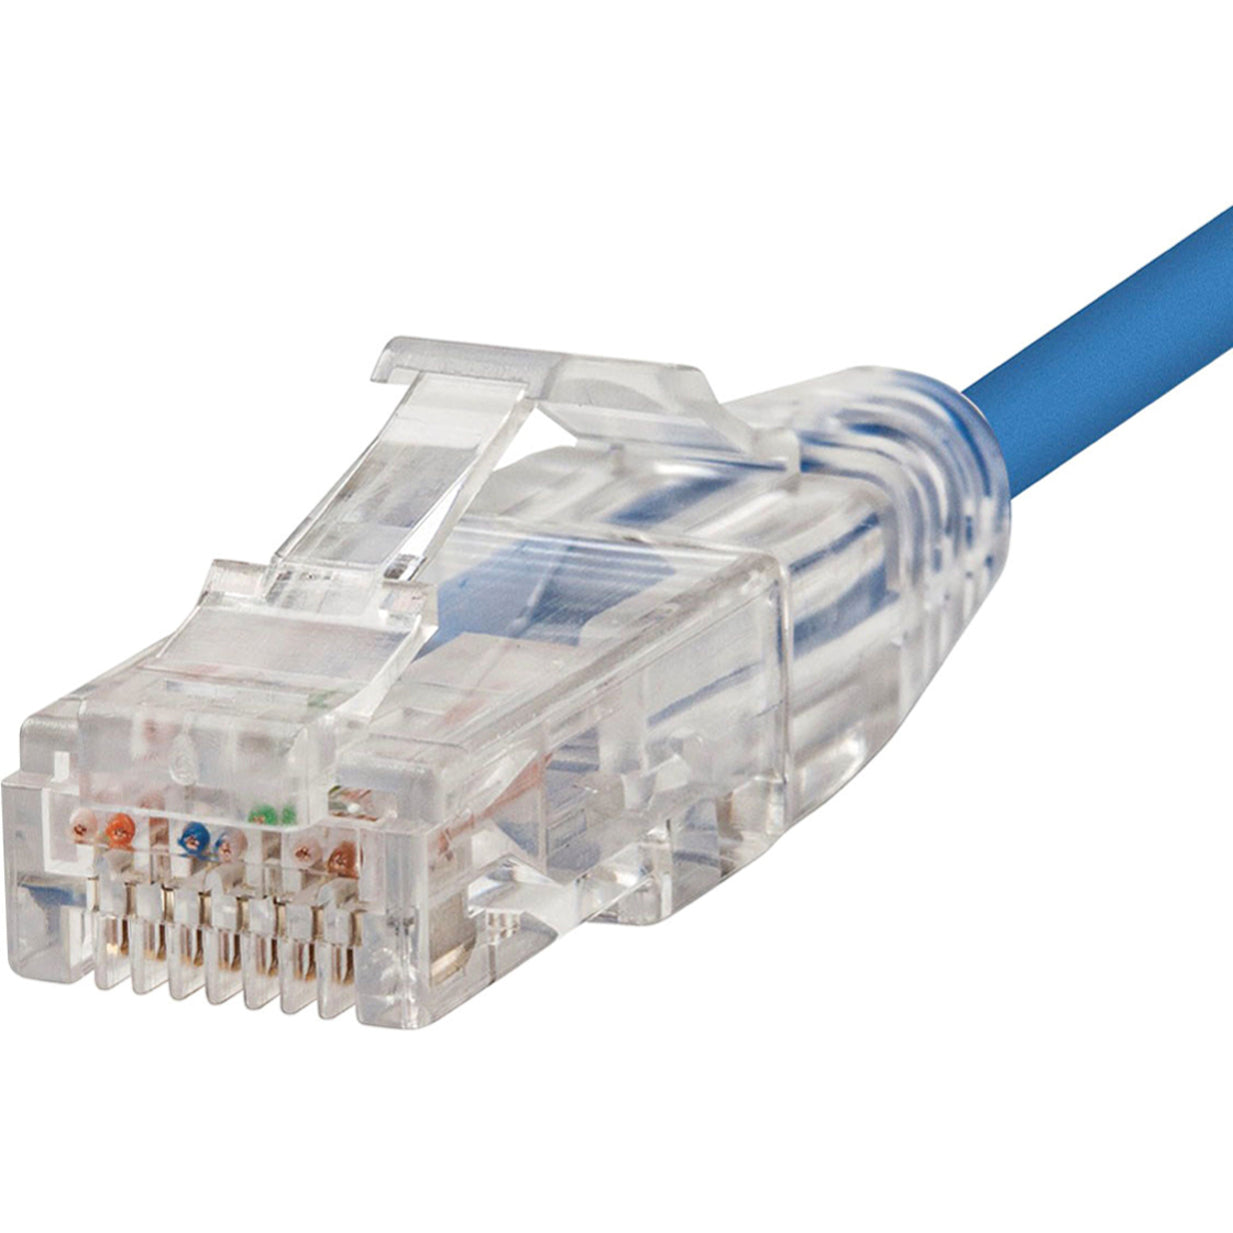 Monoprice 13533 SlimRun Cat6 28AWG UTP Ethernet Network Cable, 5ft Blue, Flexible, Snagless